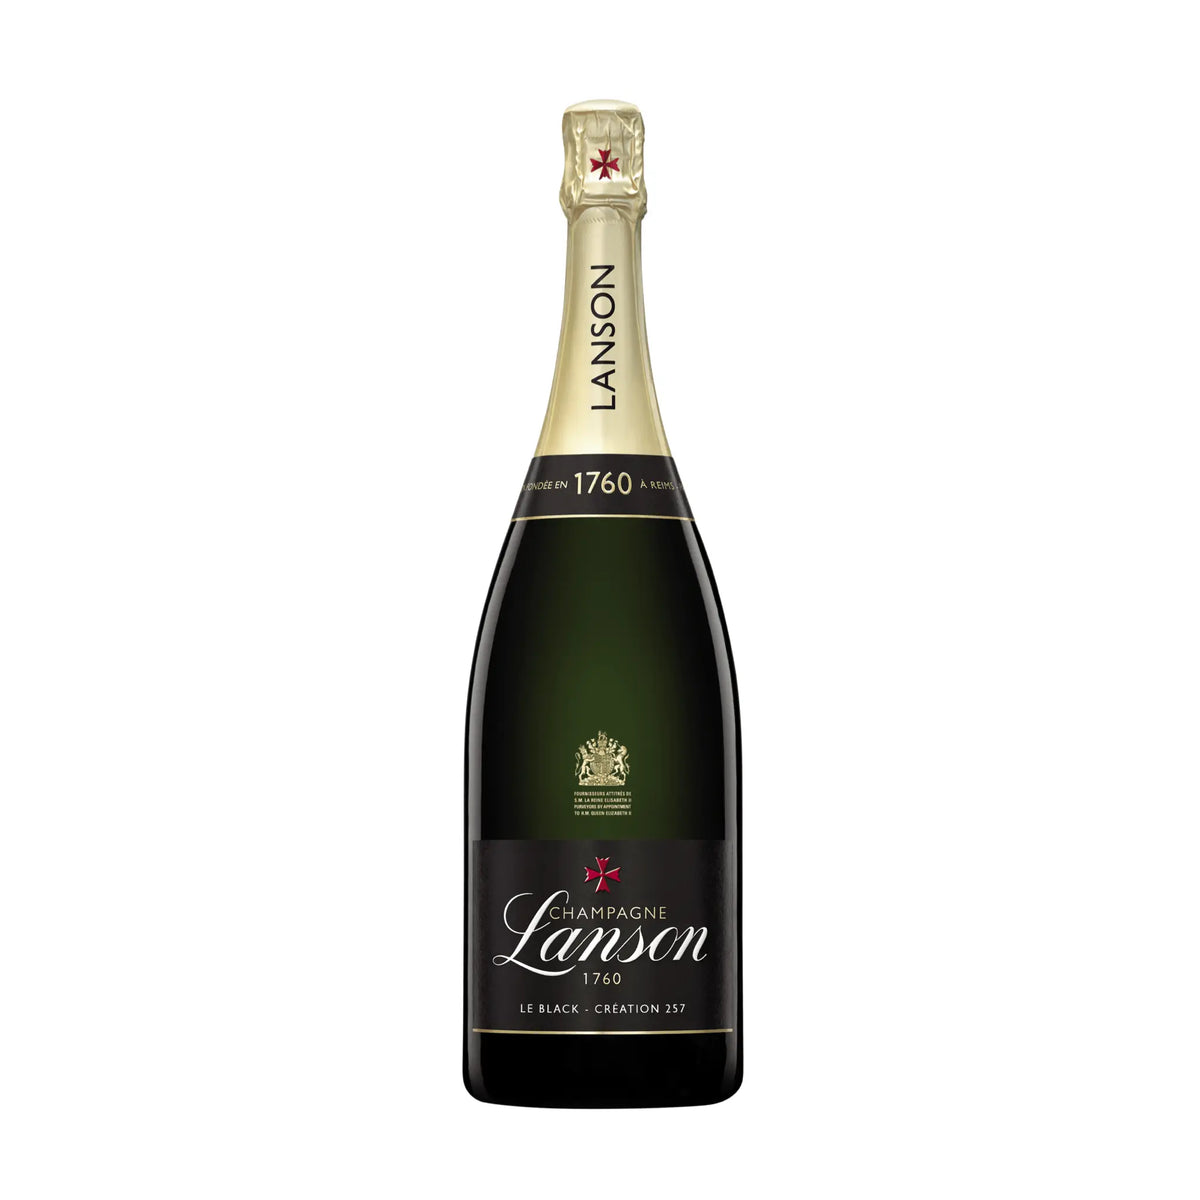 Champagne Lanson-Schaumwein-Champagner-Champagne-Frankreich-Le Black Label Brut Magnum-WINECOM